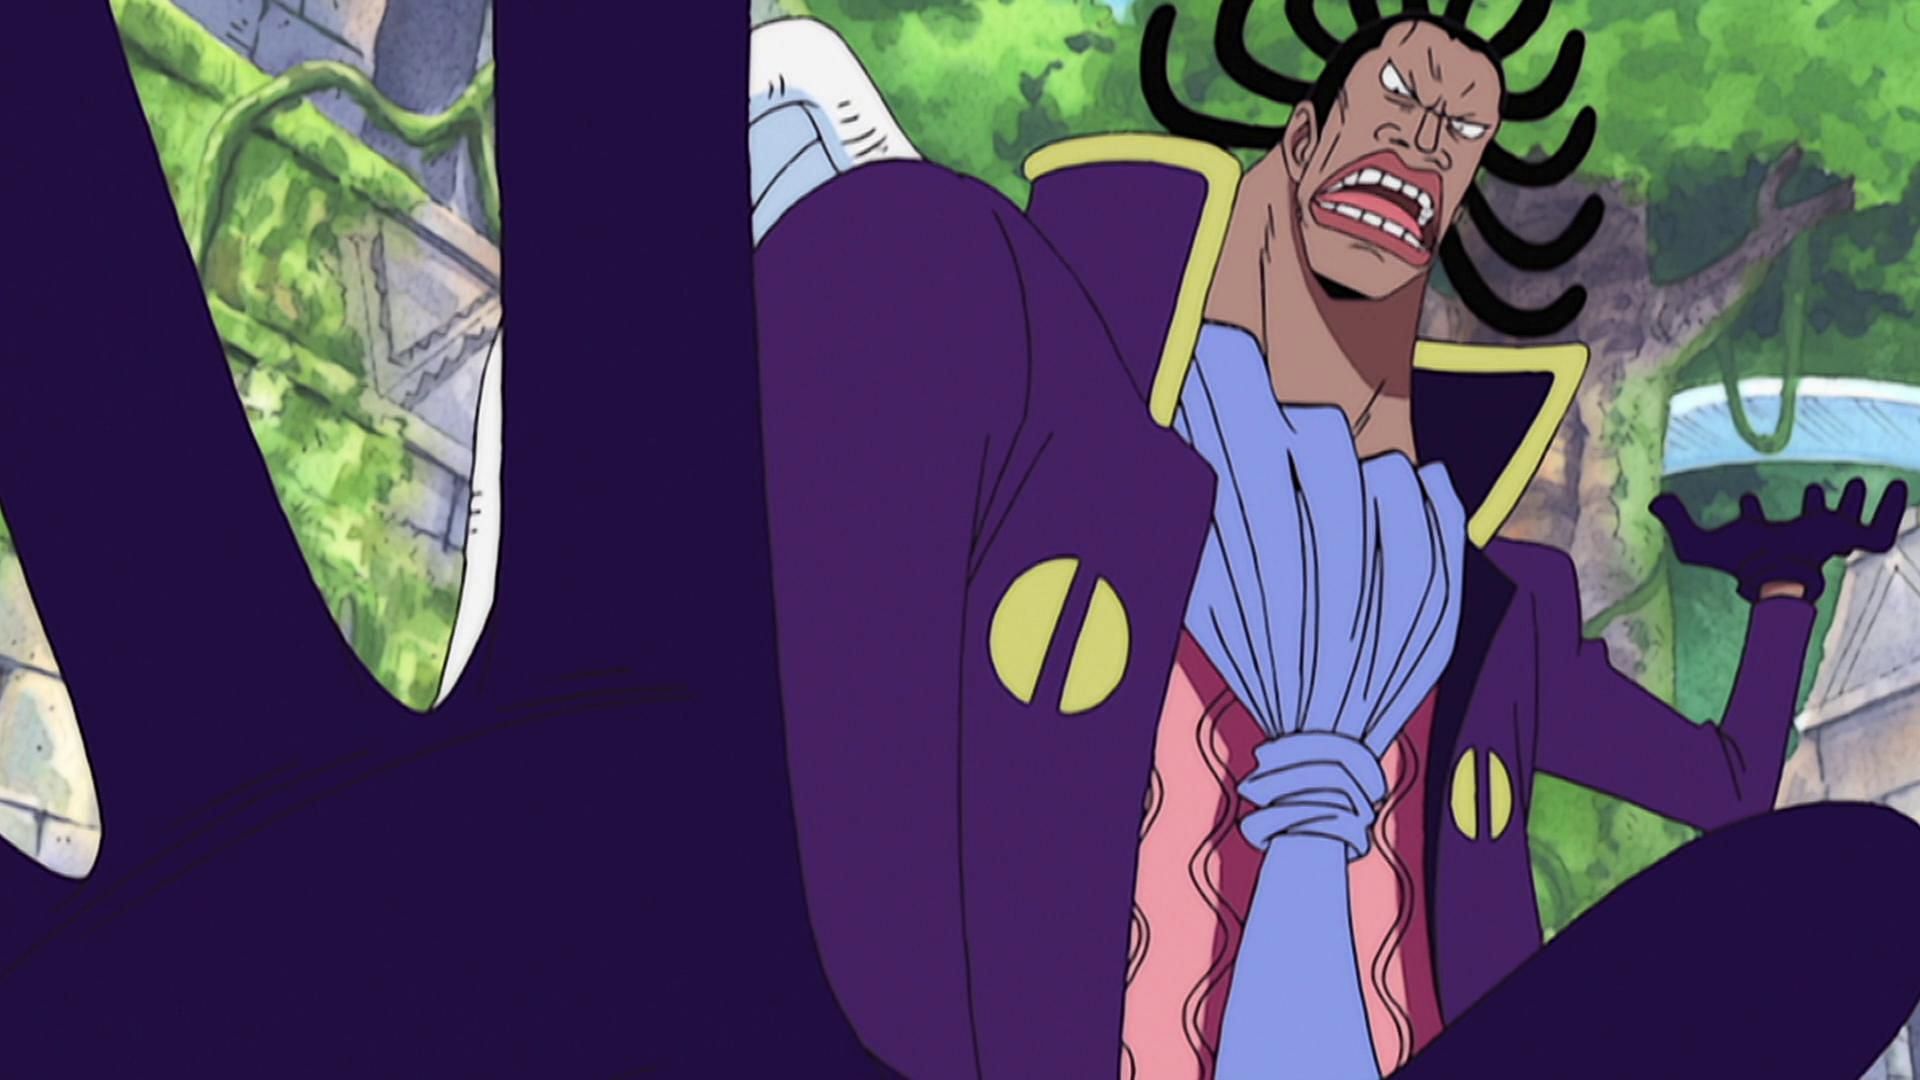 Gedatsu as seen in One Piece (Image via Toei Animation)